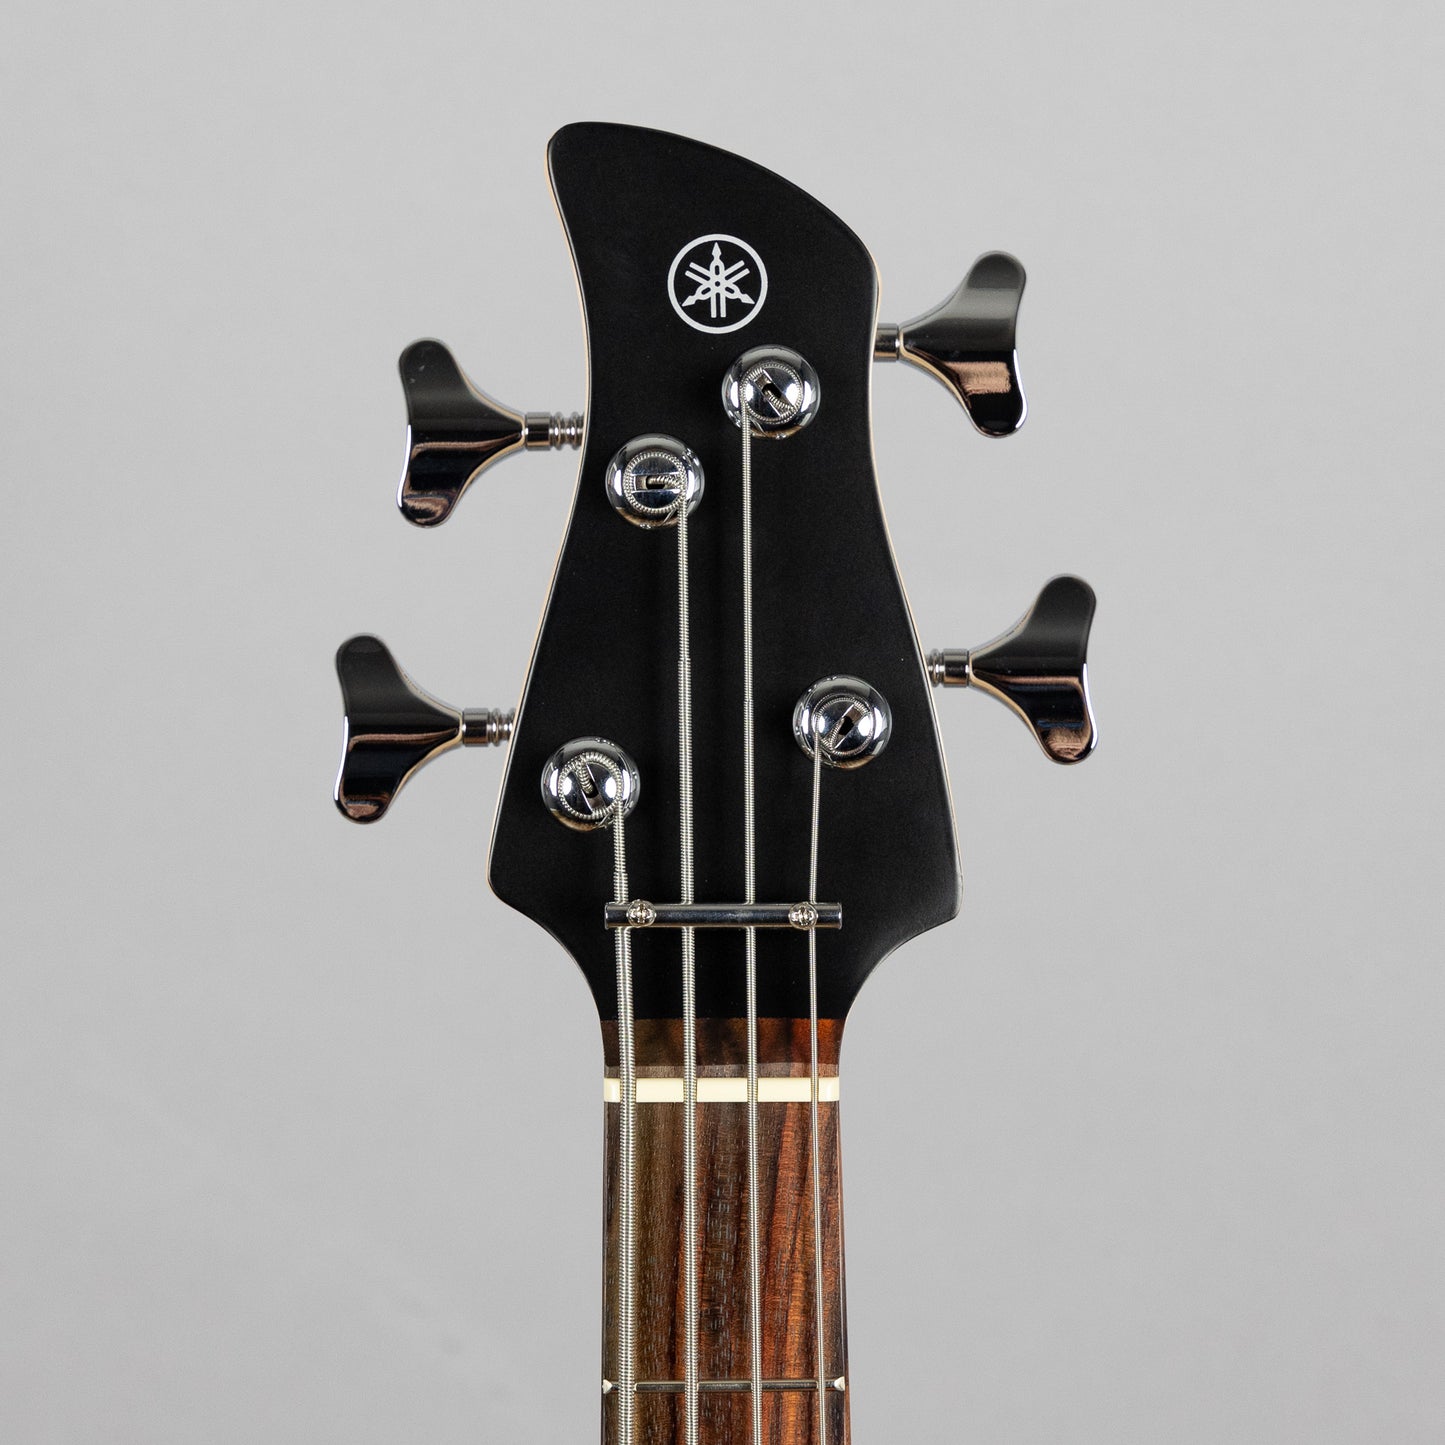 Yamaha TRBX174 4-String Bass in Dark Blue Metallic